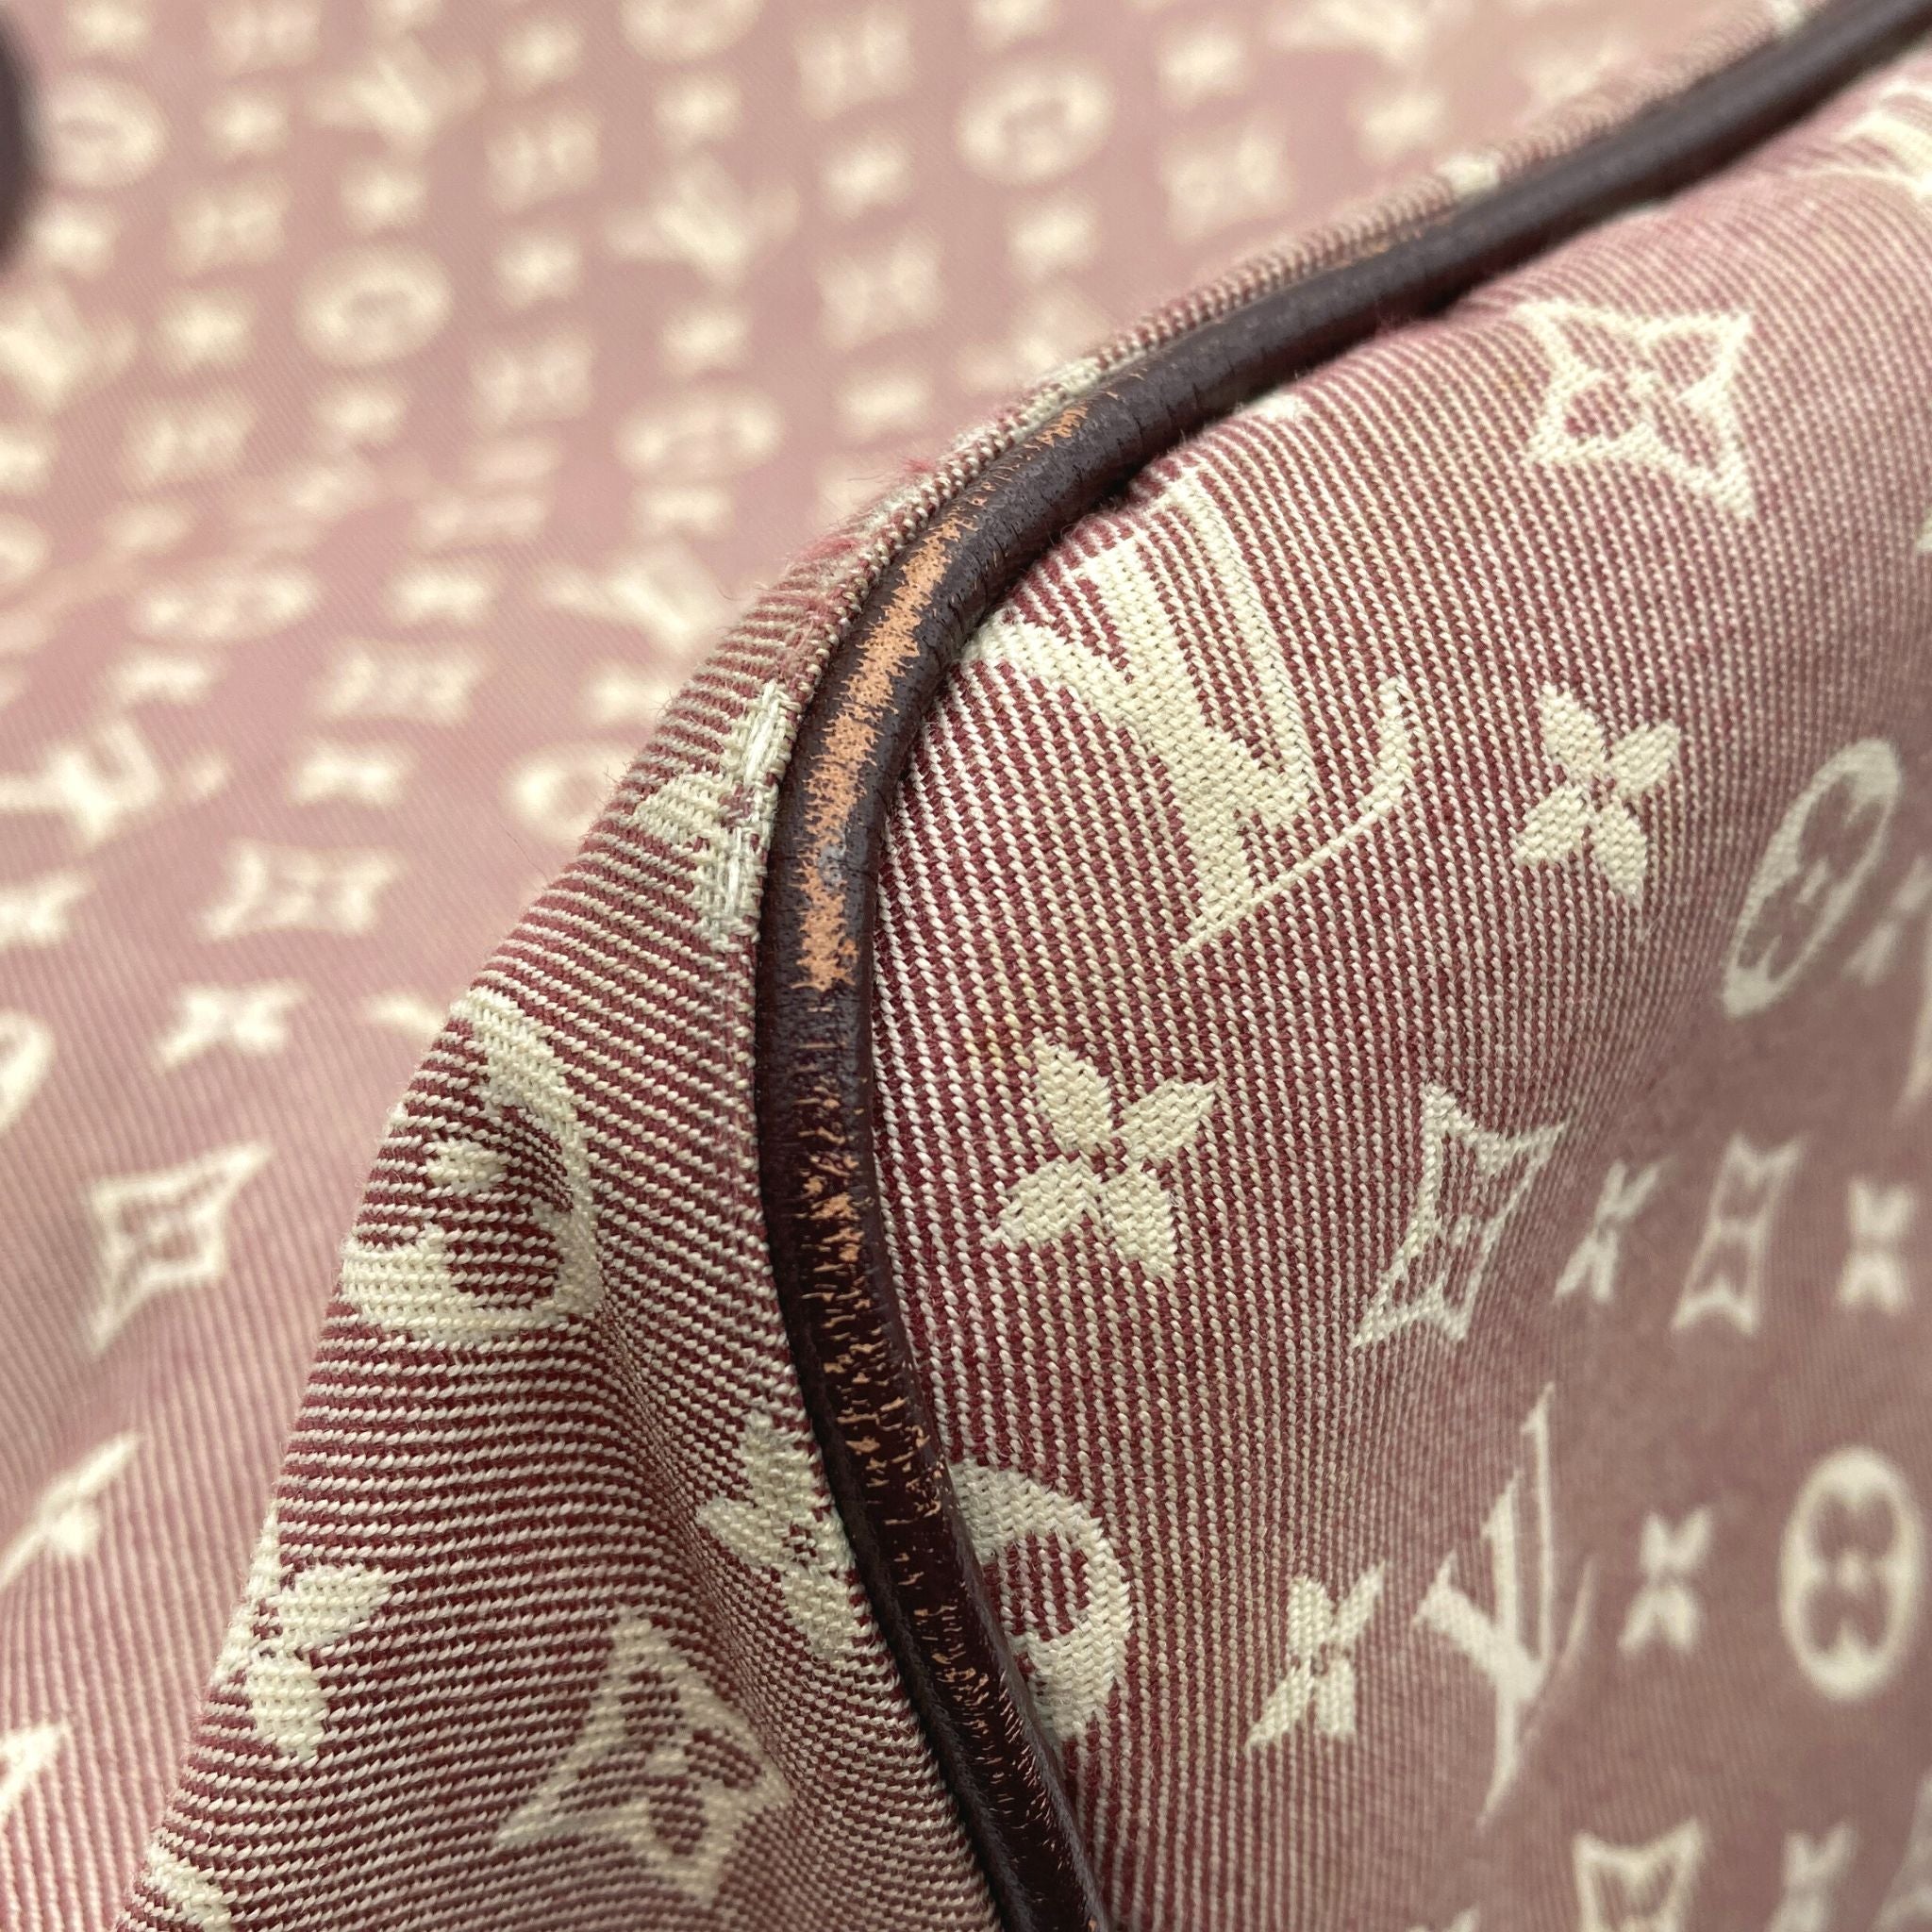 Louis Vuitton Bordeaux Monogram Neverfull Handbag